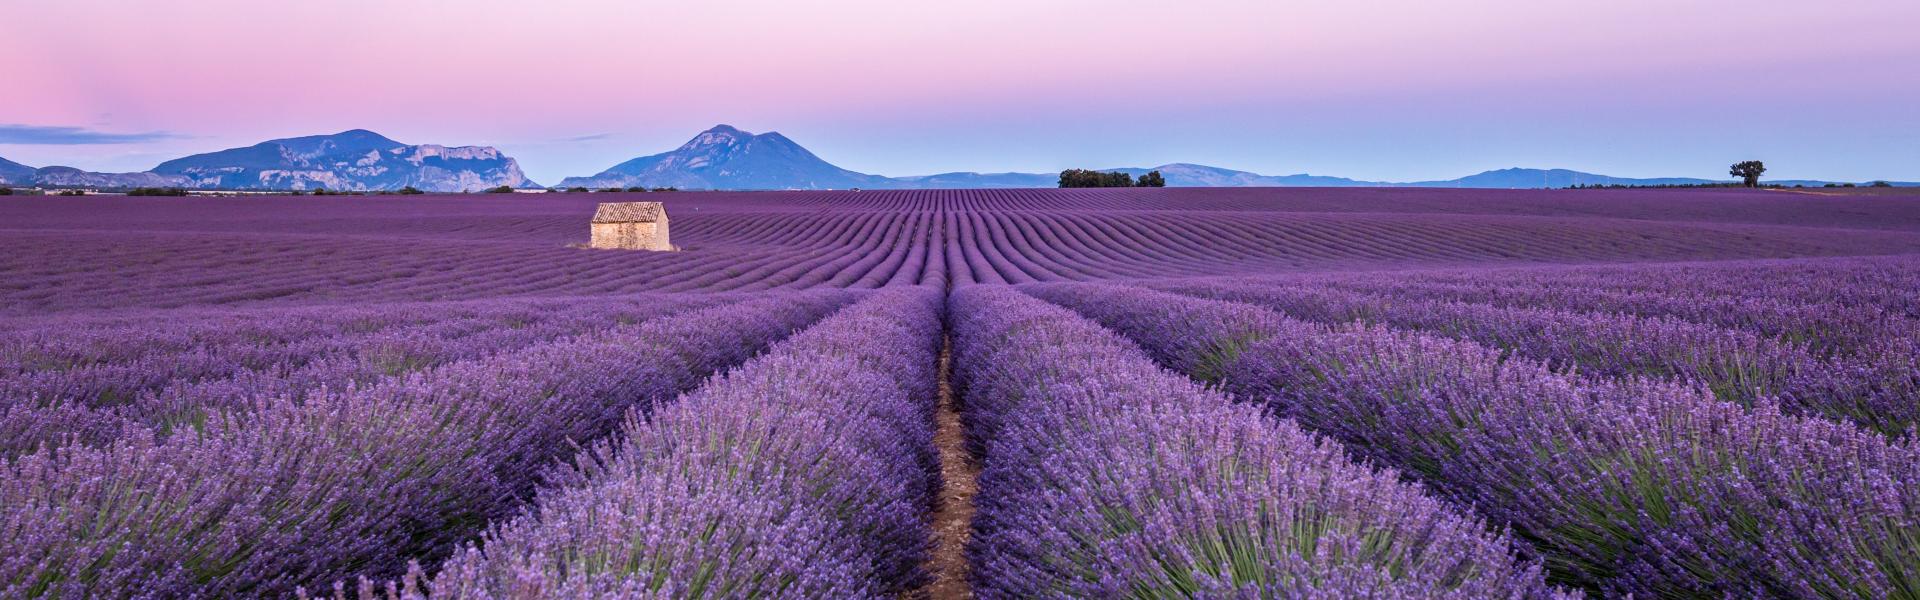 Lavender field at sunset, Valensole, Provence, Southern France